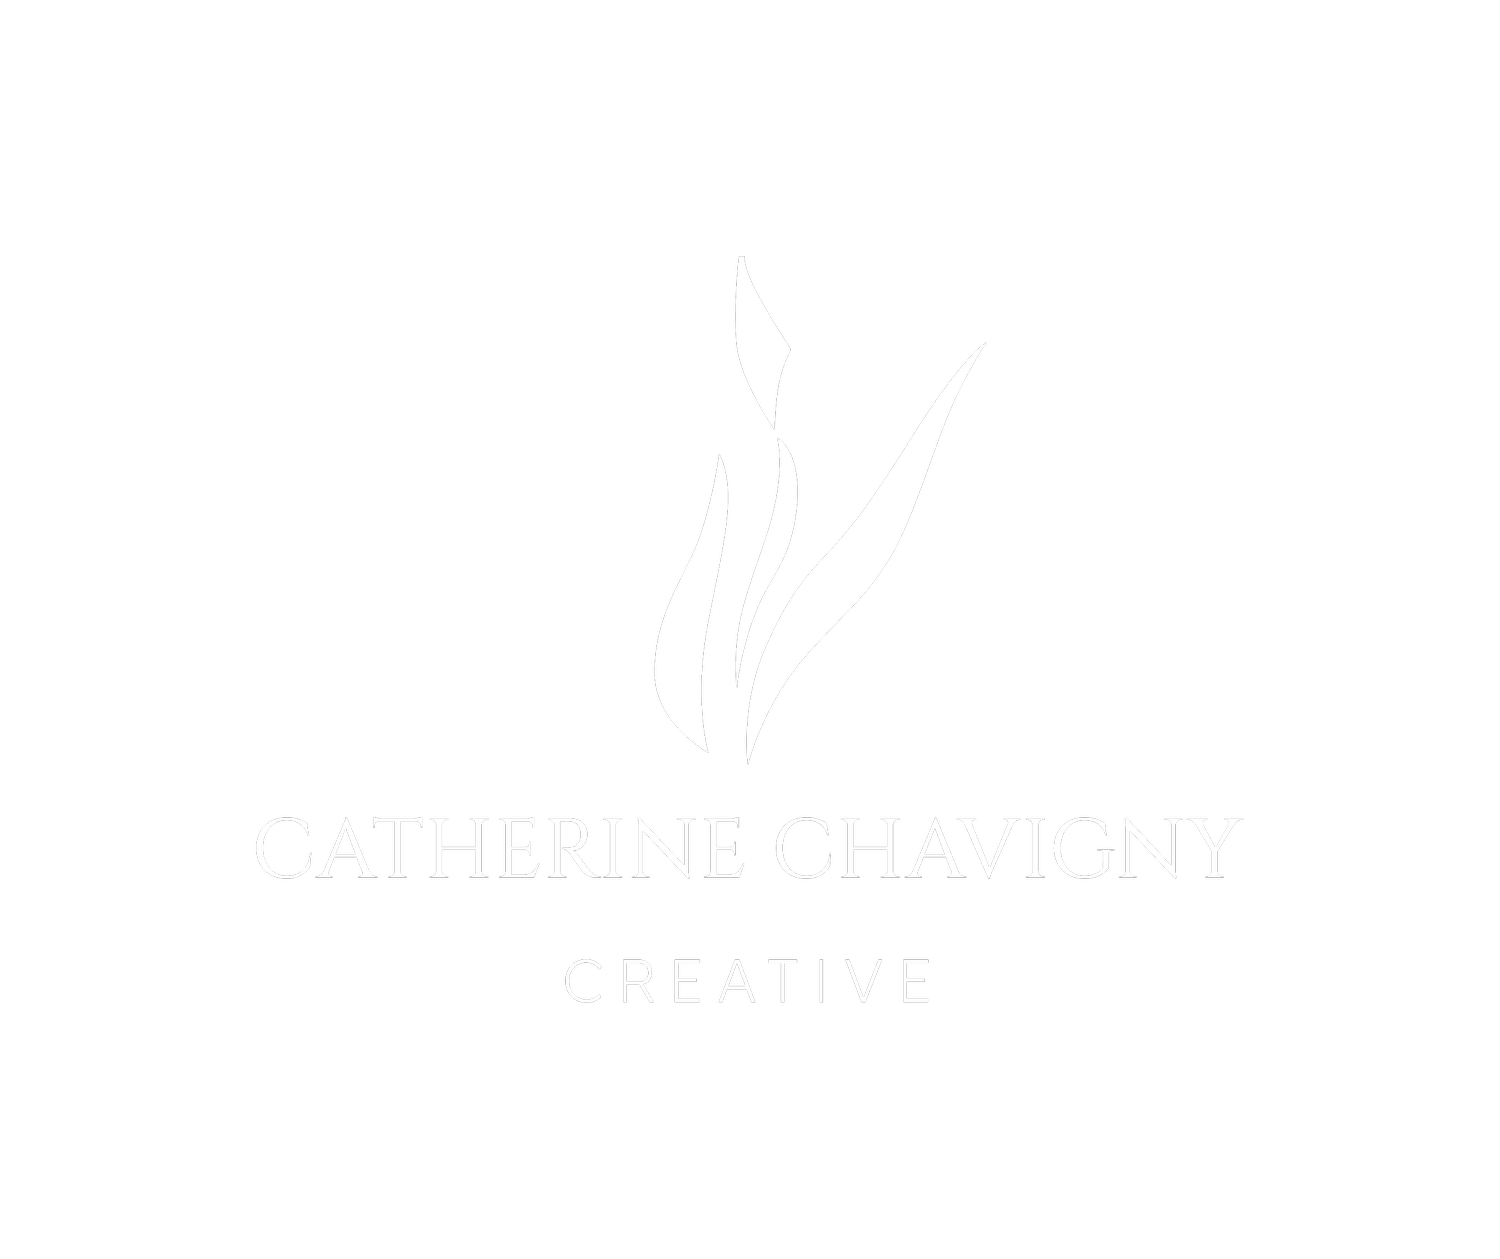 CATHERINE CHAVIGNY